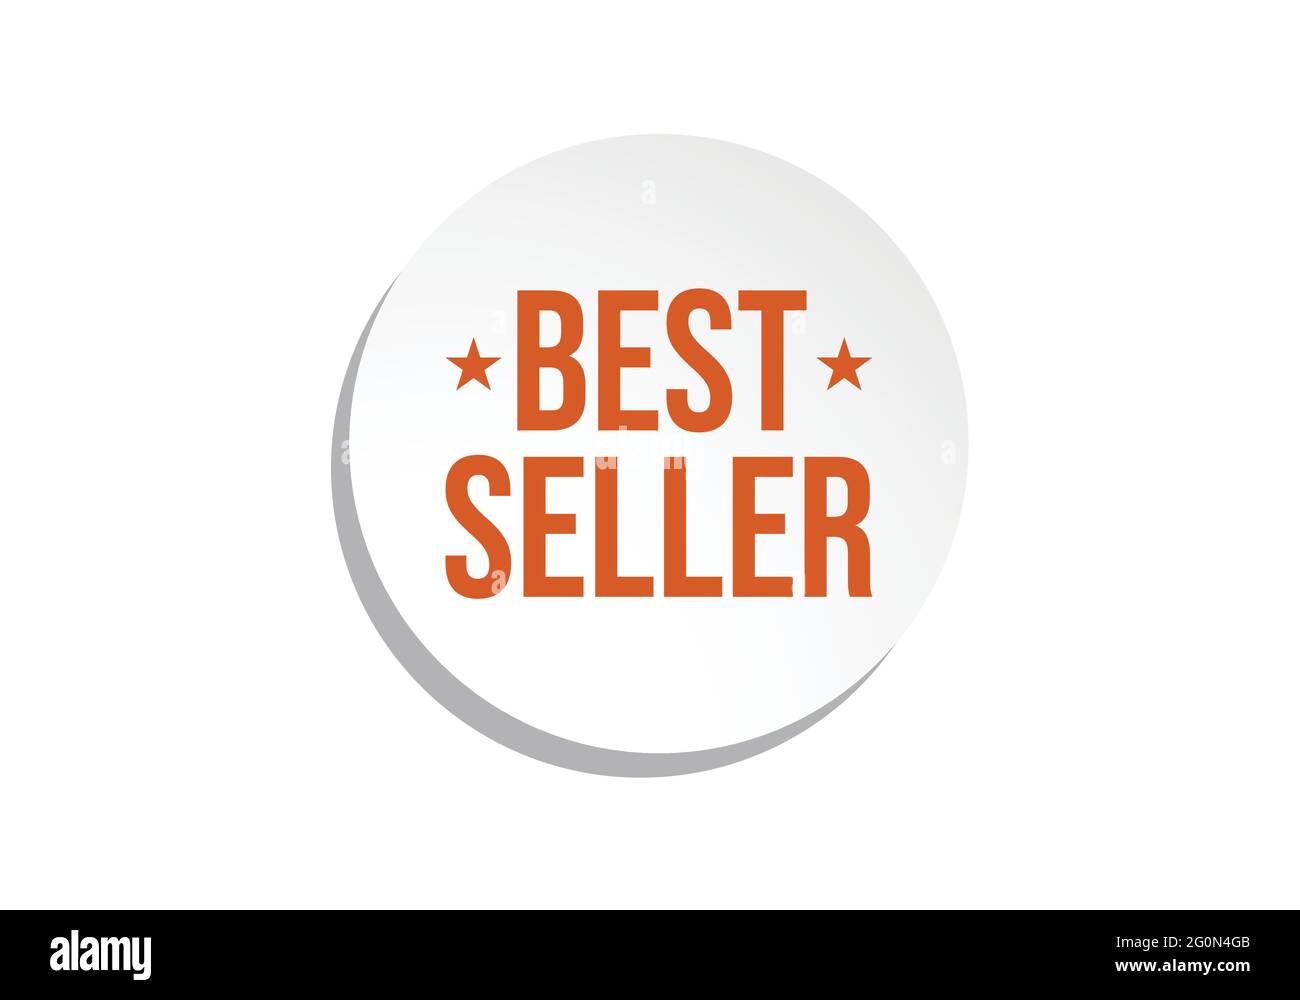 https://c8.alamy.com/comp/2G0N4GB/best-seller-icon-design-best-seller-badge-logo-design-template-vector-illustration-2G0N4GB.jpg